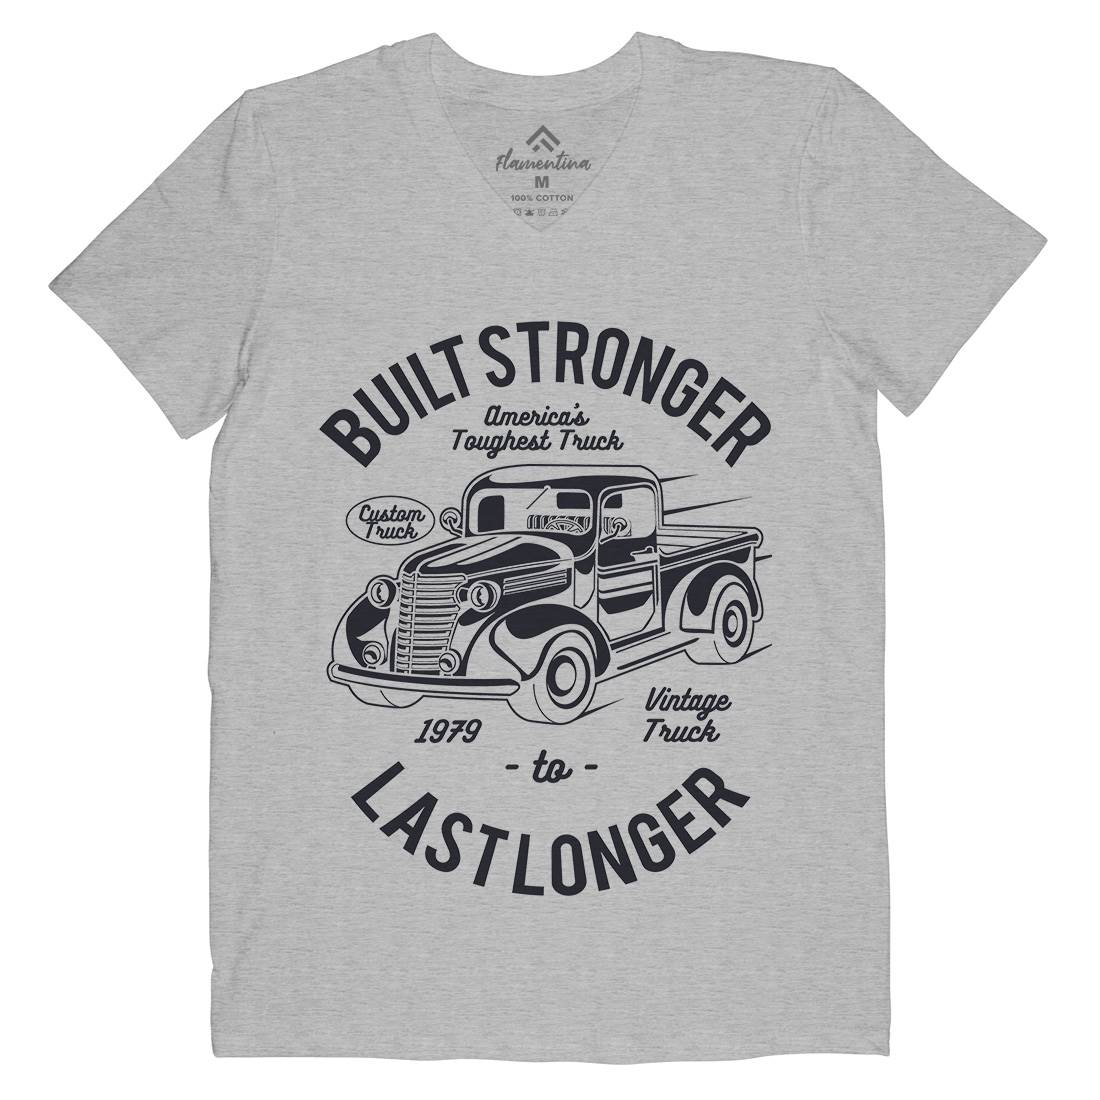 Built Stronger Mens Organic V-Neck T-Shirt Cars A023